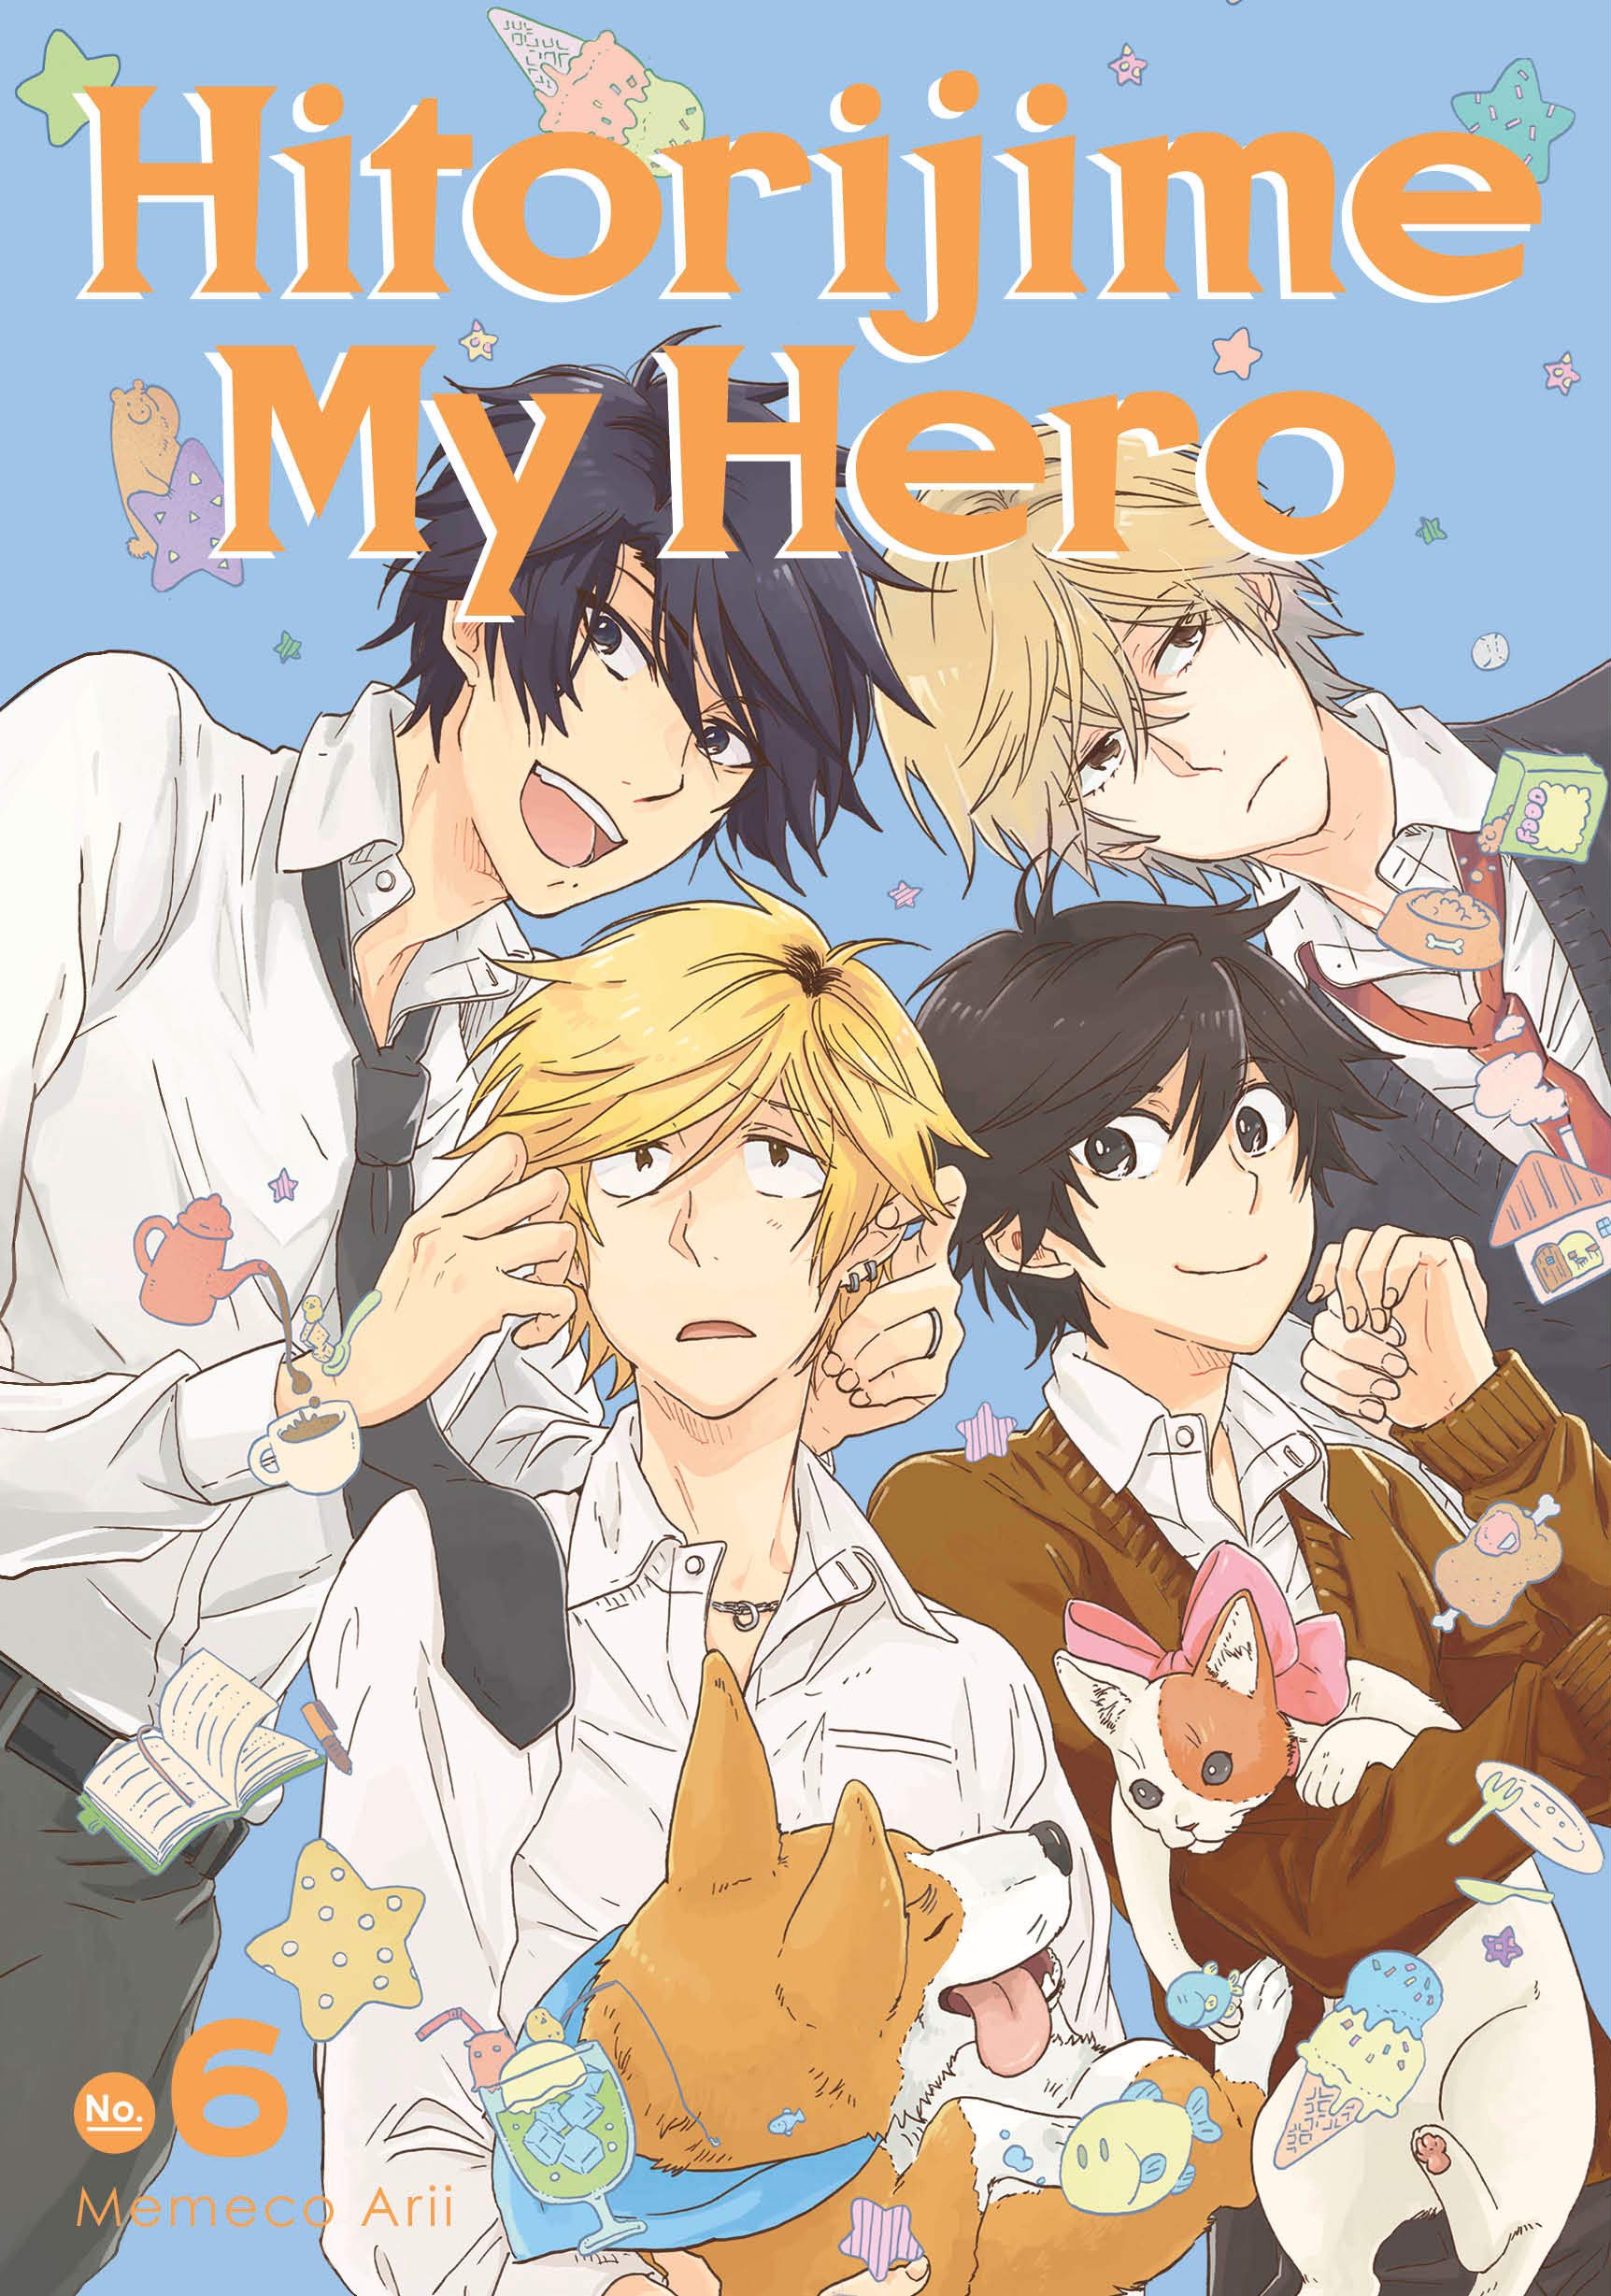 Hitorijime My Hero, Vol. 1 by Memeco Arii